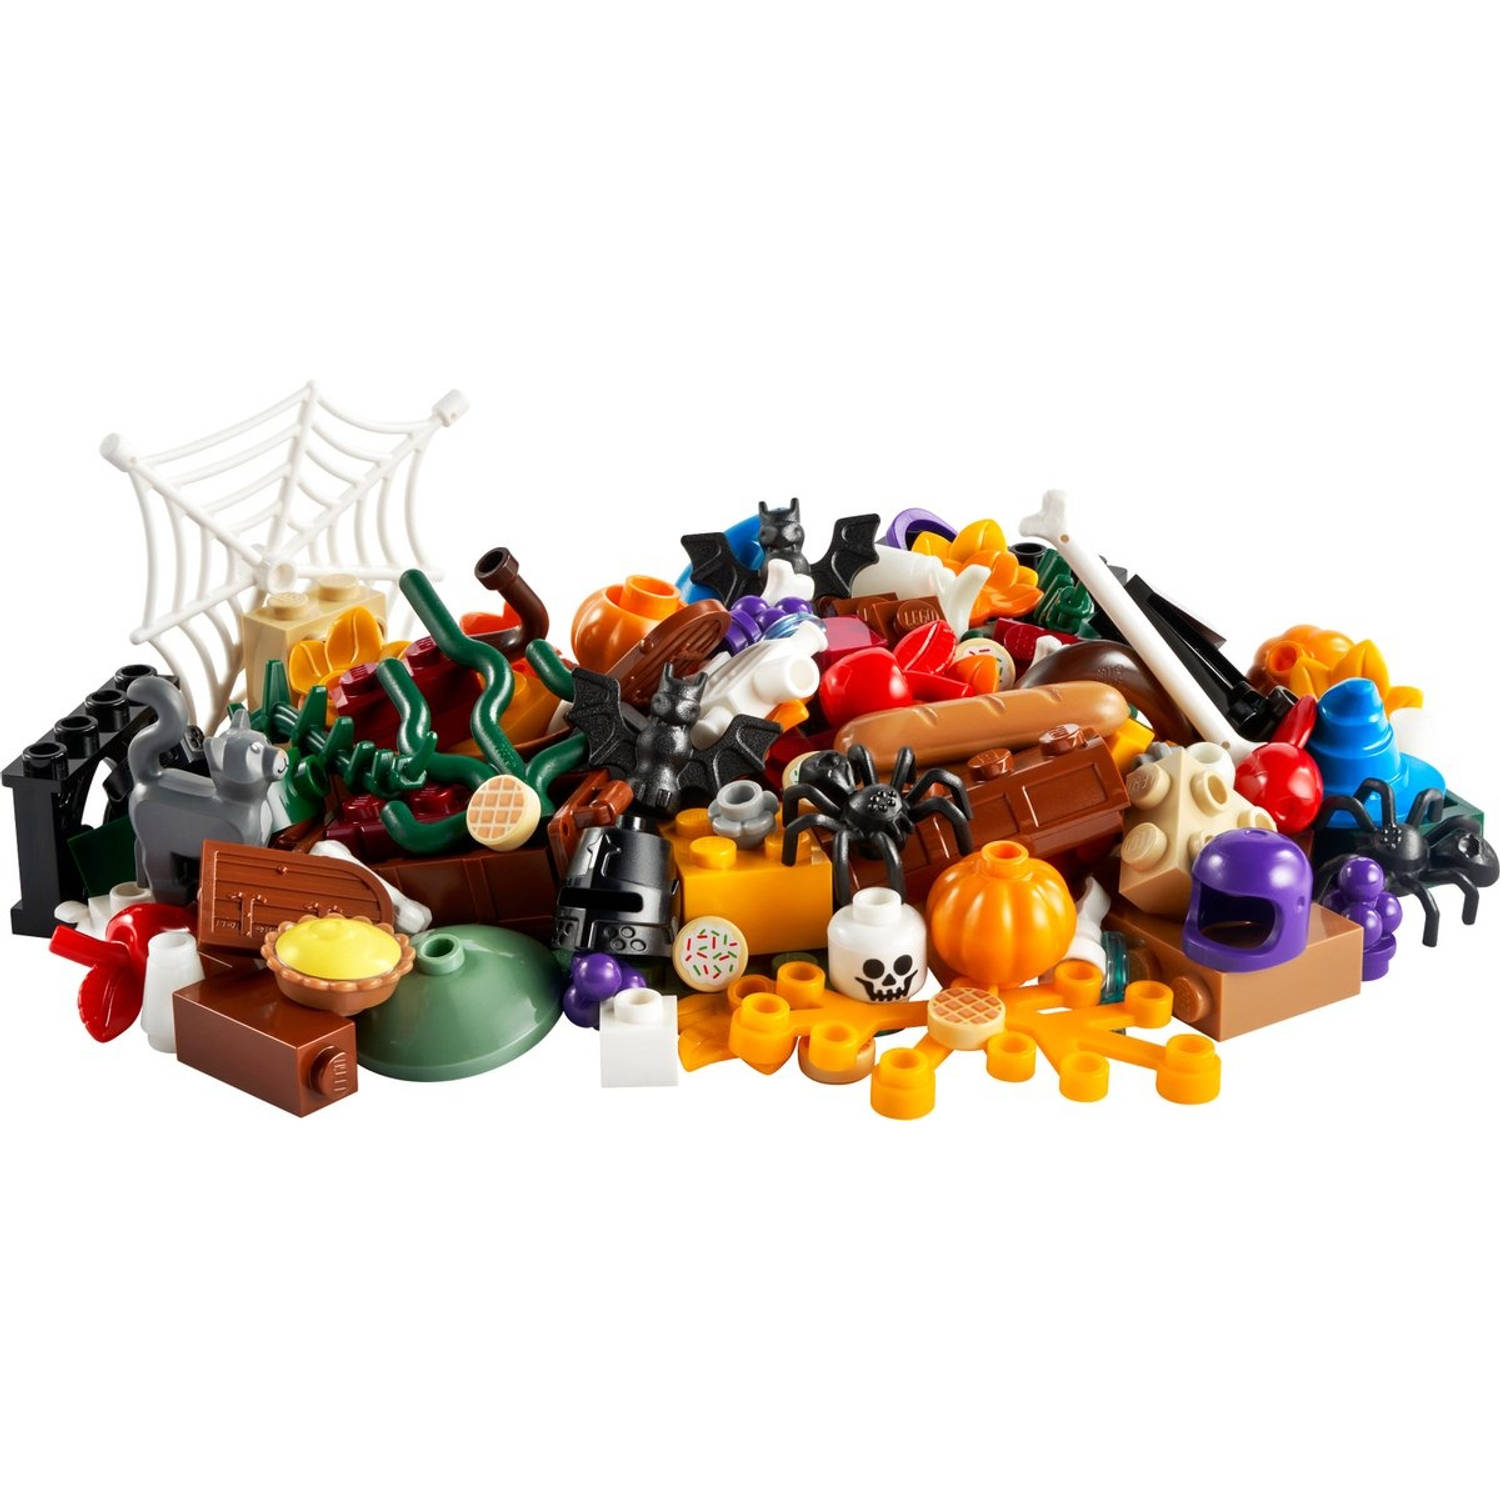 Lego 40608 Halloween Plezier VIP (Polybag)